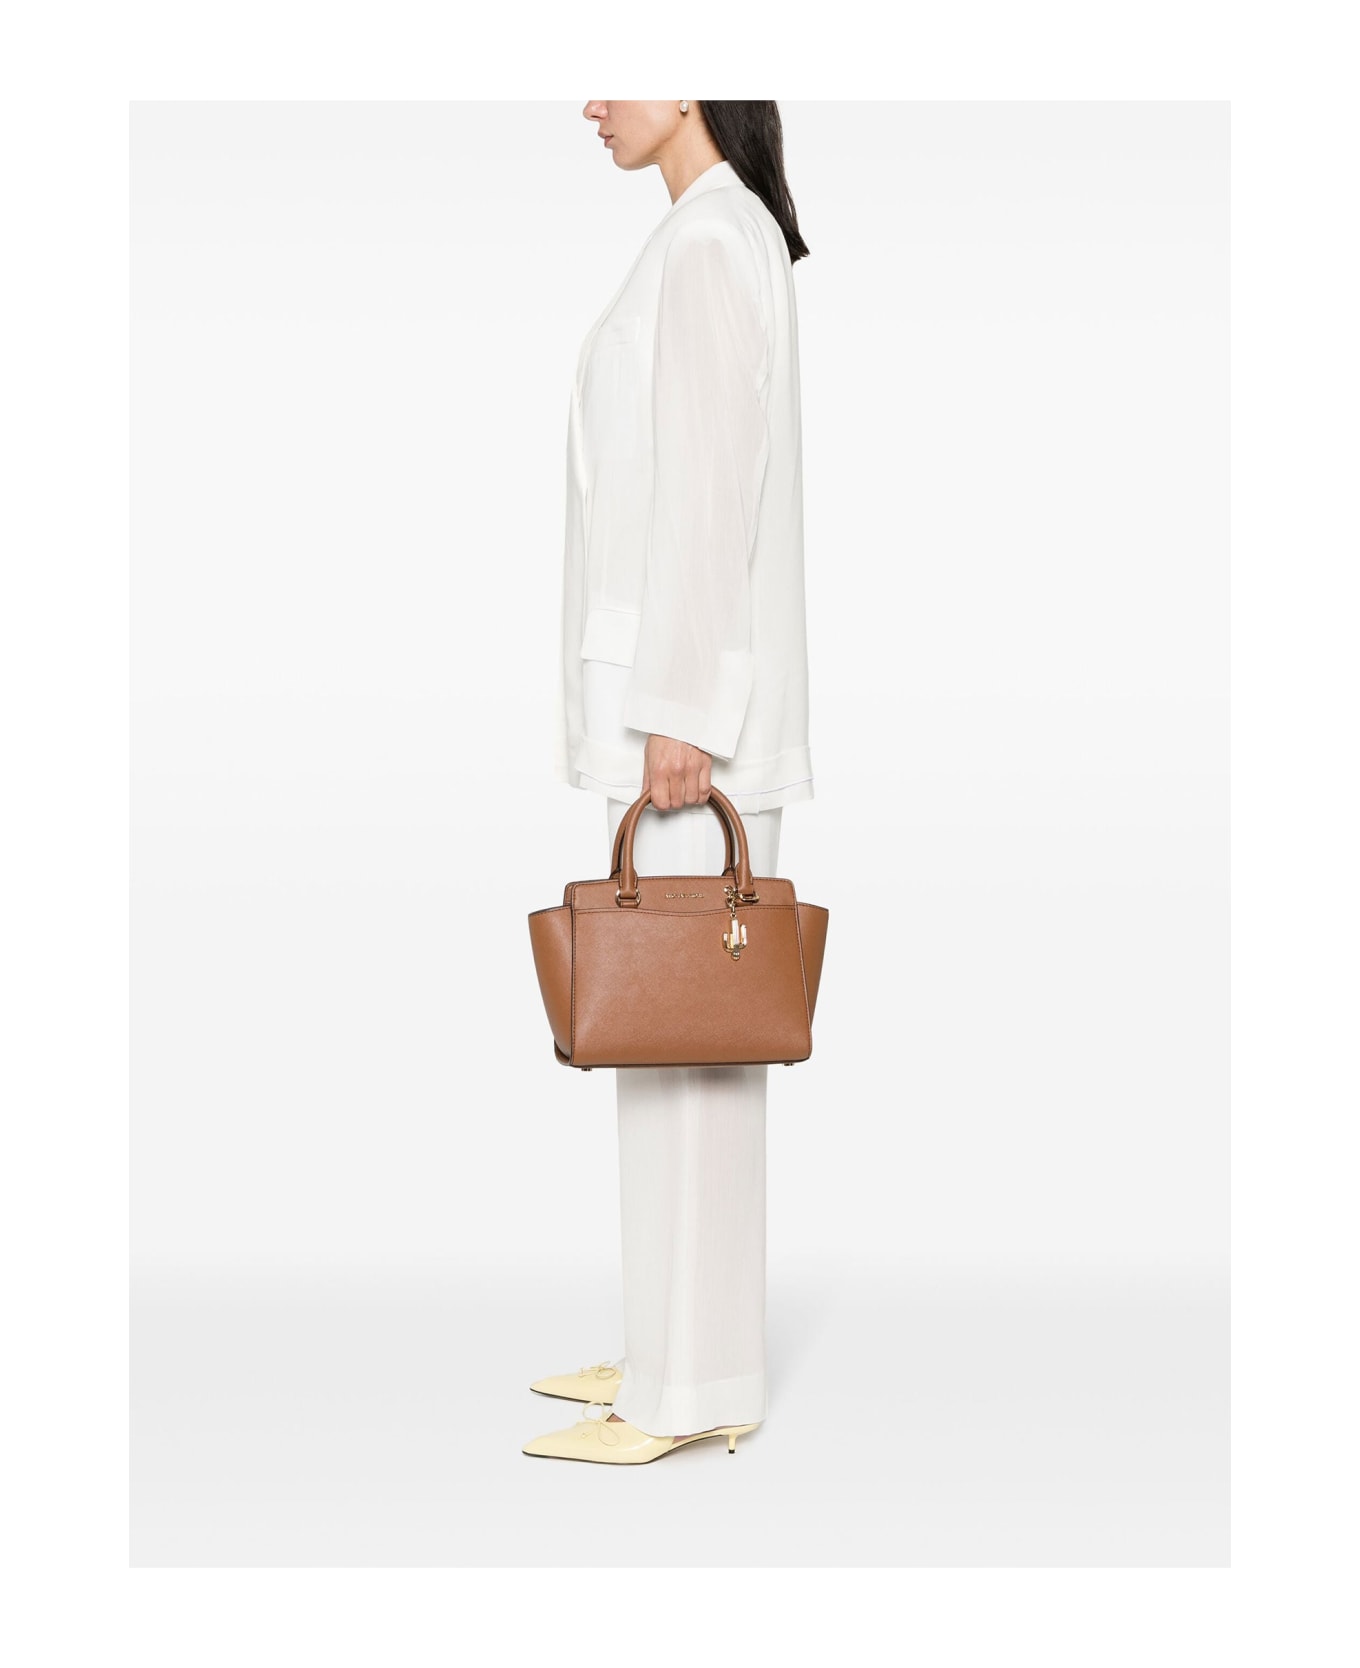 Michael Kors Saffiano Effect Handbag With Shoulder Strap - LUGGAGE トートバッグ